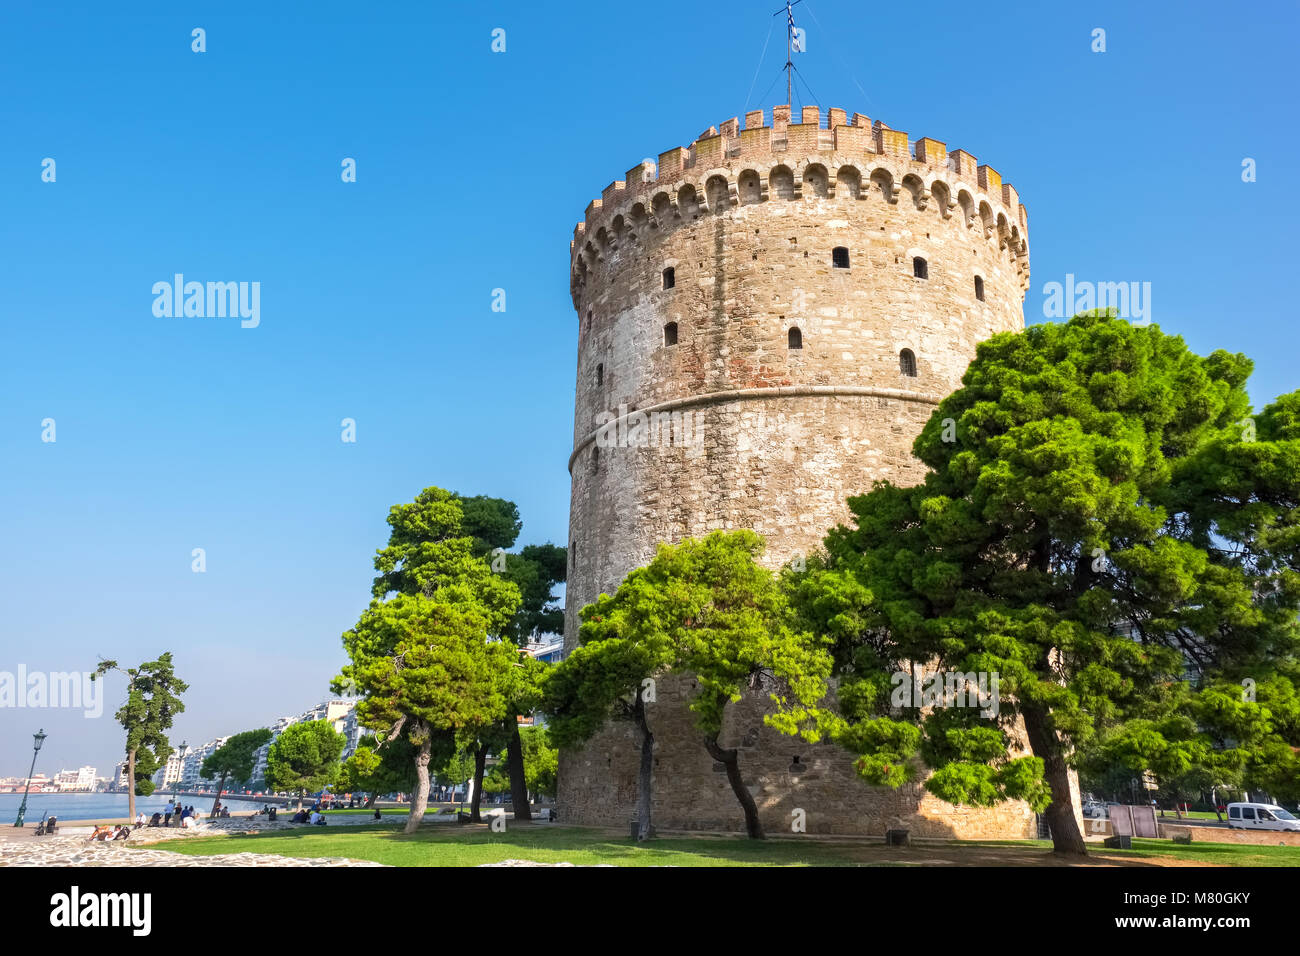 The White Tower (Lefkos Pyrgos) on the waterfront in Thessaloniki. Macedonia, Greece Stock Photo